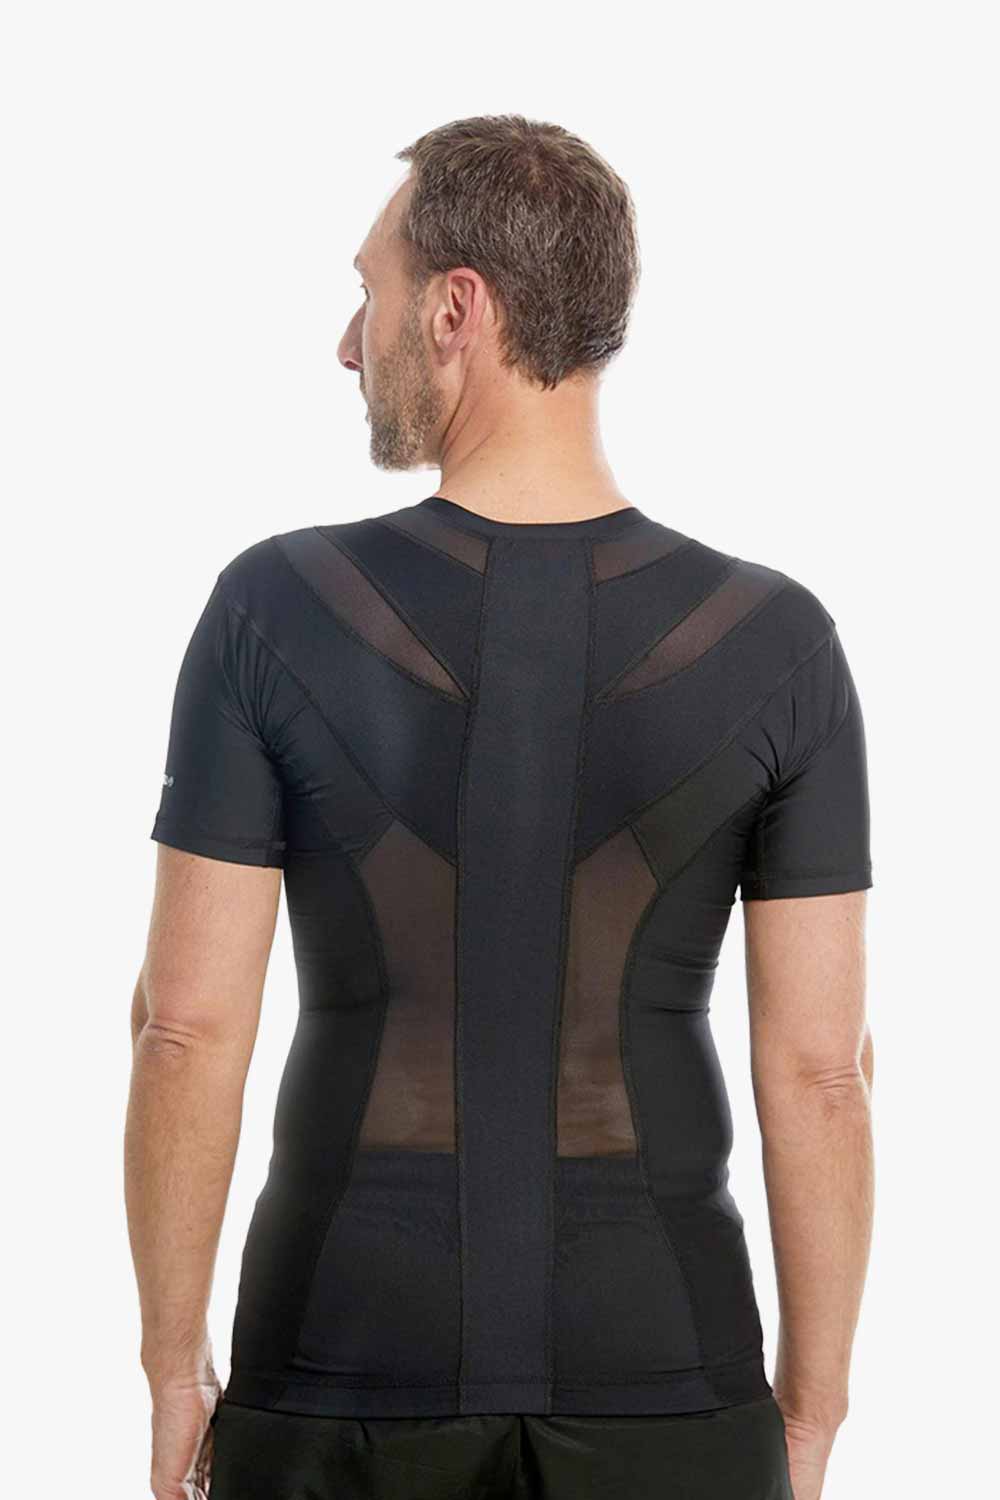 Men's Posture Shirt™ - Noir